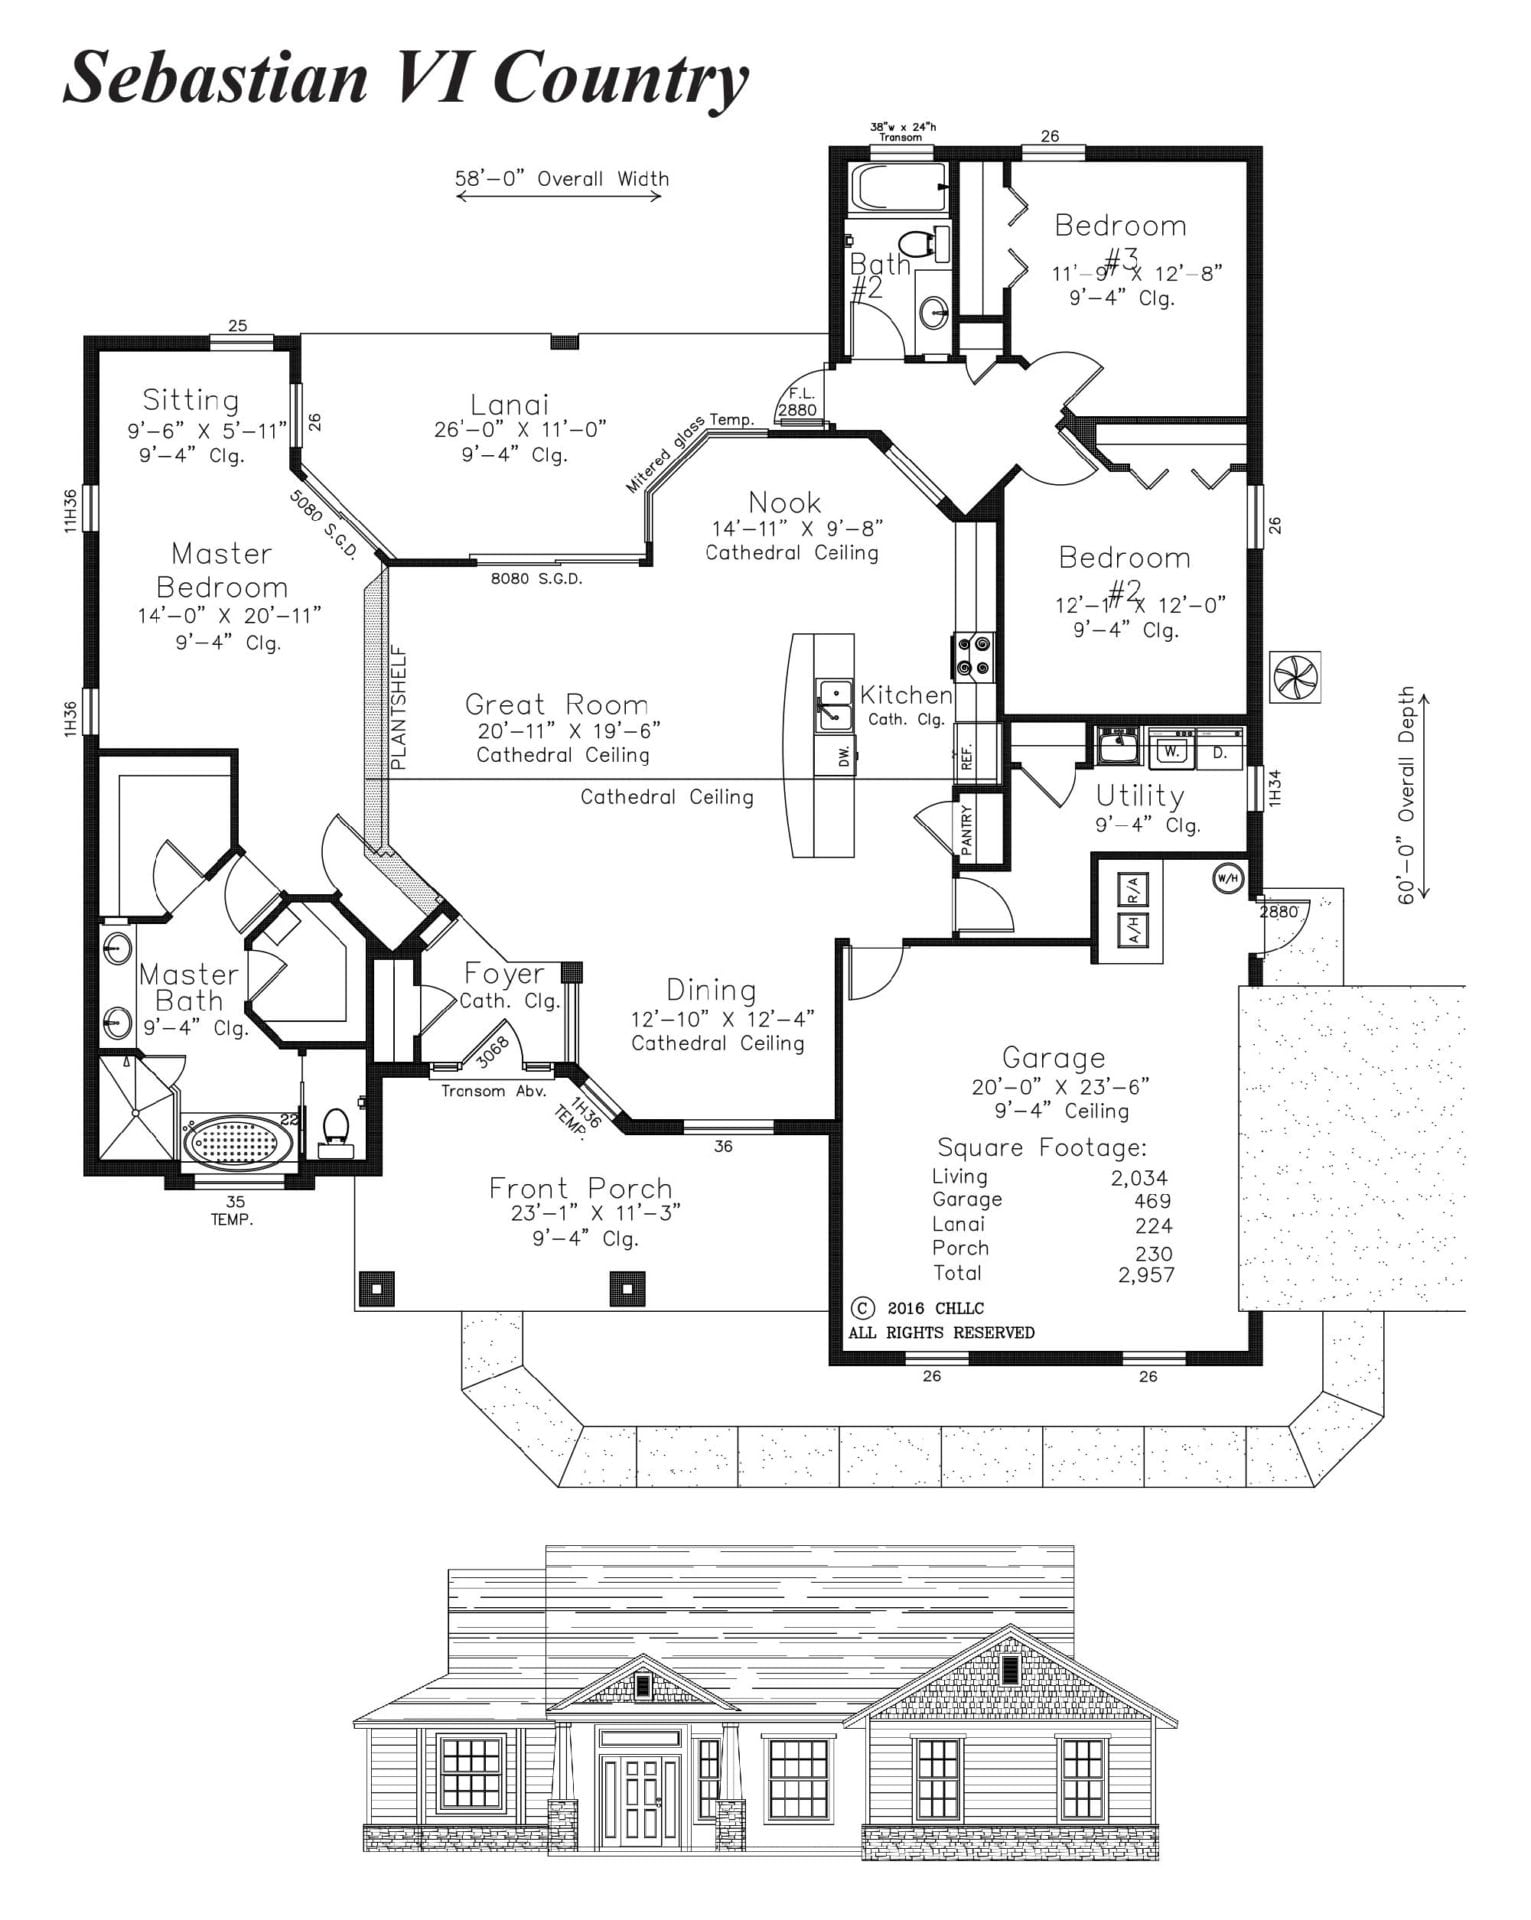 Sebastion VI Country - Floor Plan - Curington Homes - Ocala Florida Contractor